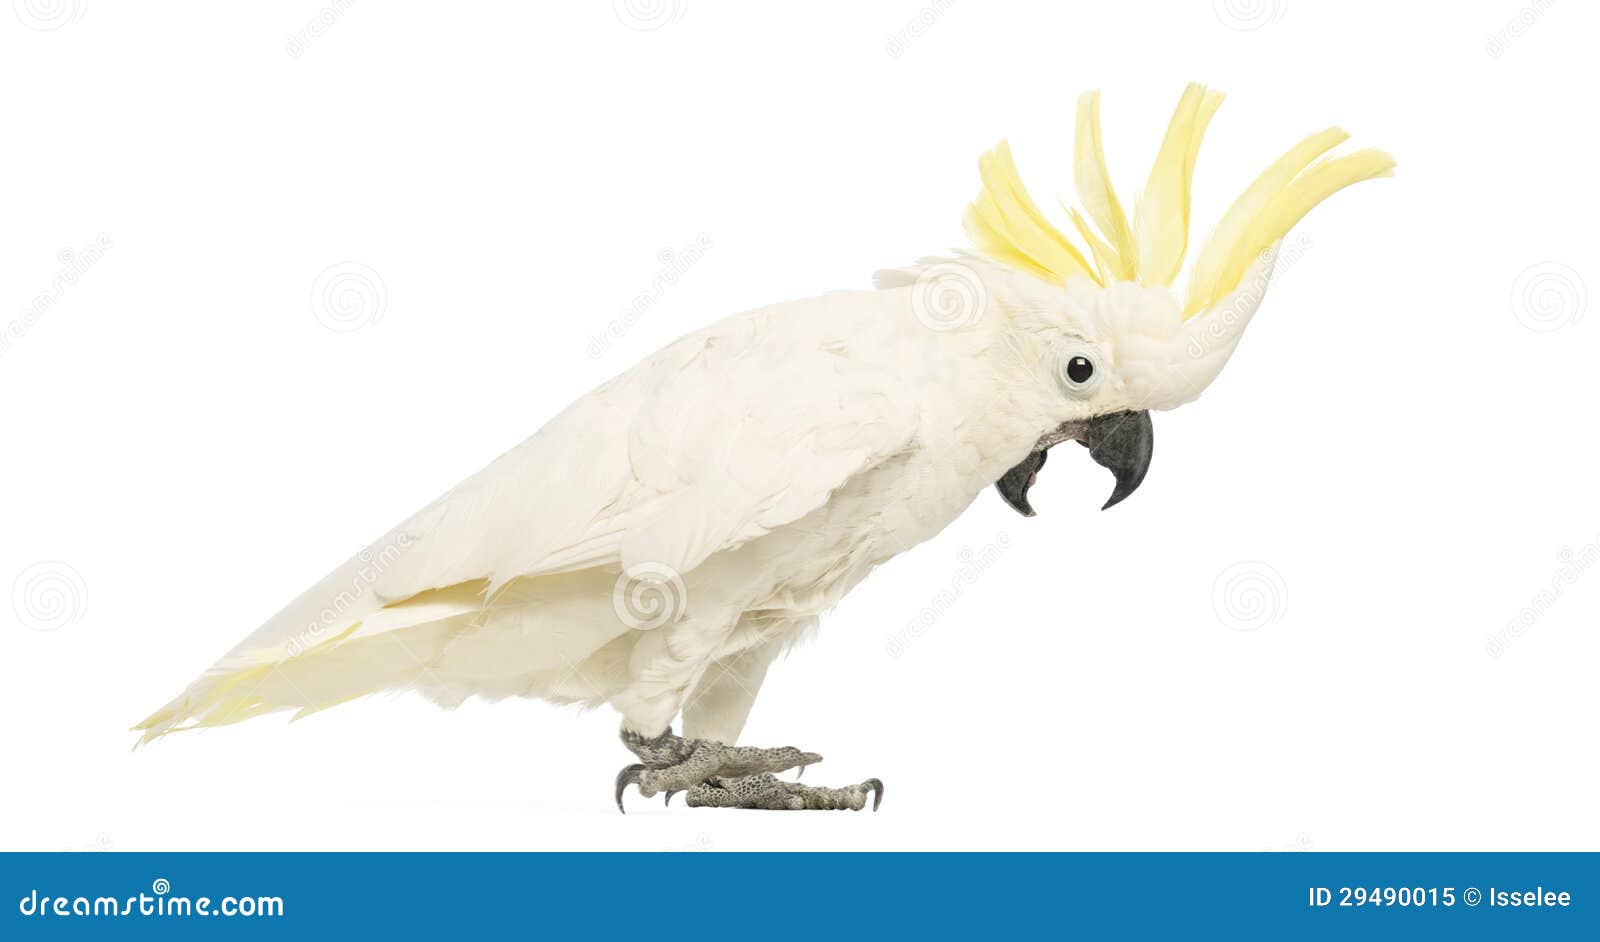 sulphur-crested cockatoo, cacatua galerita, 30 years old, with crest up